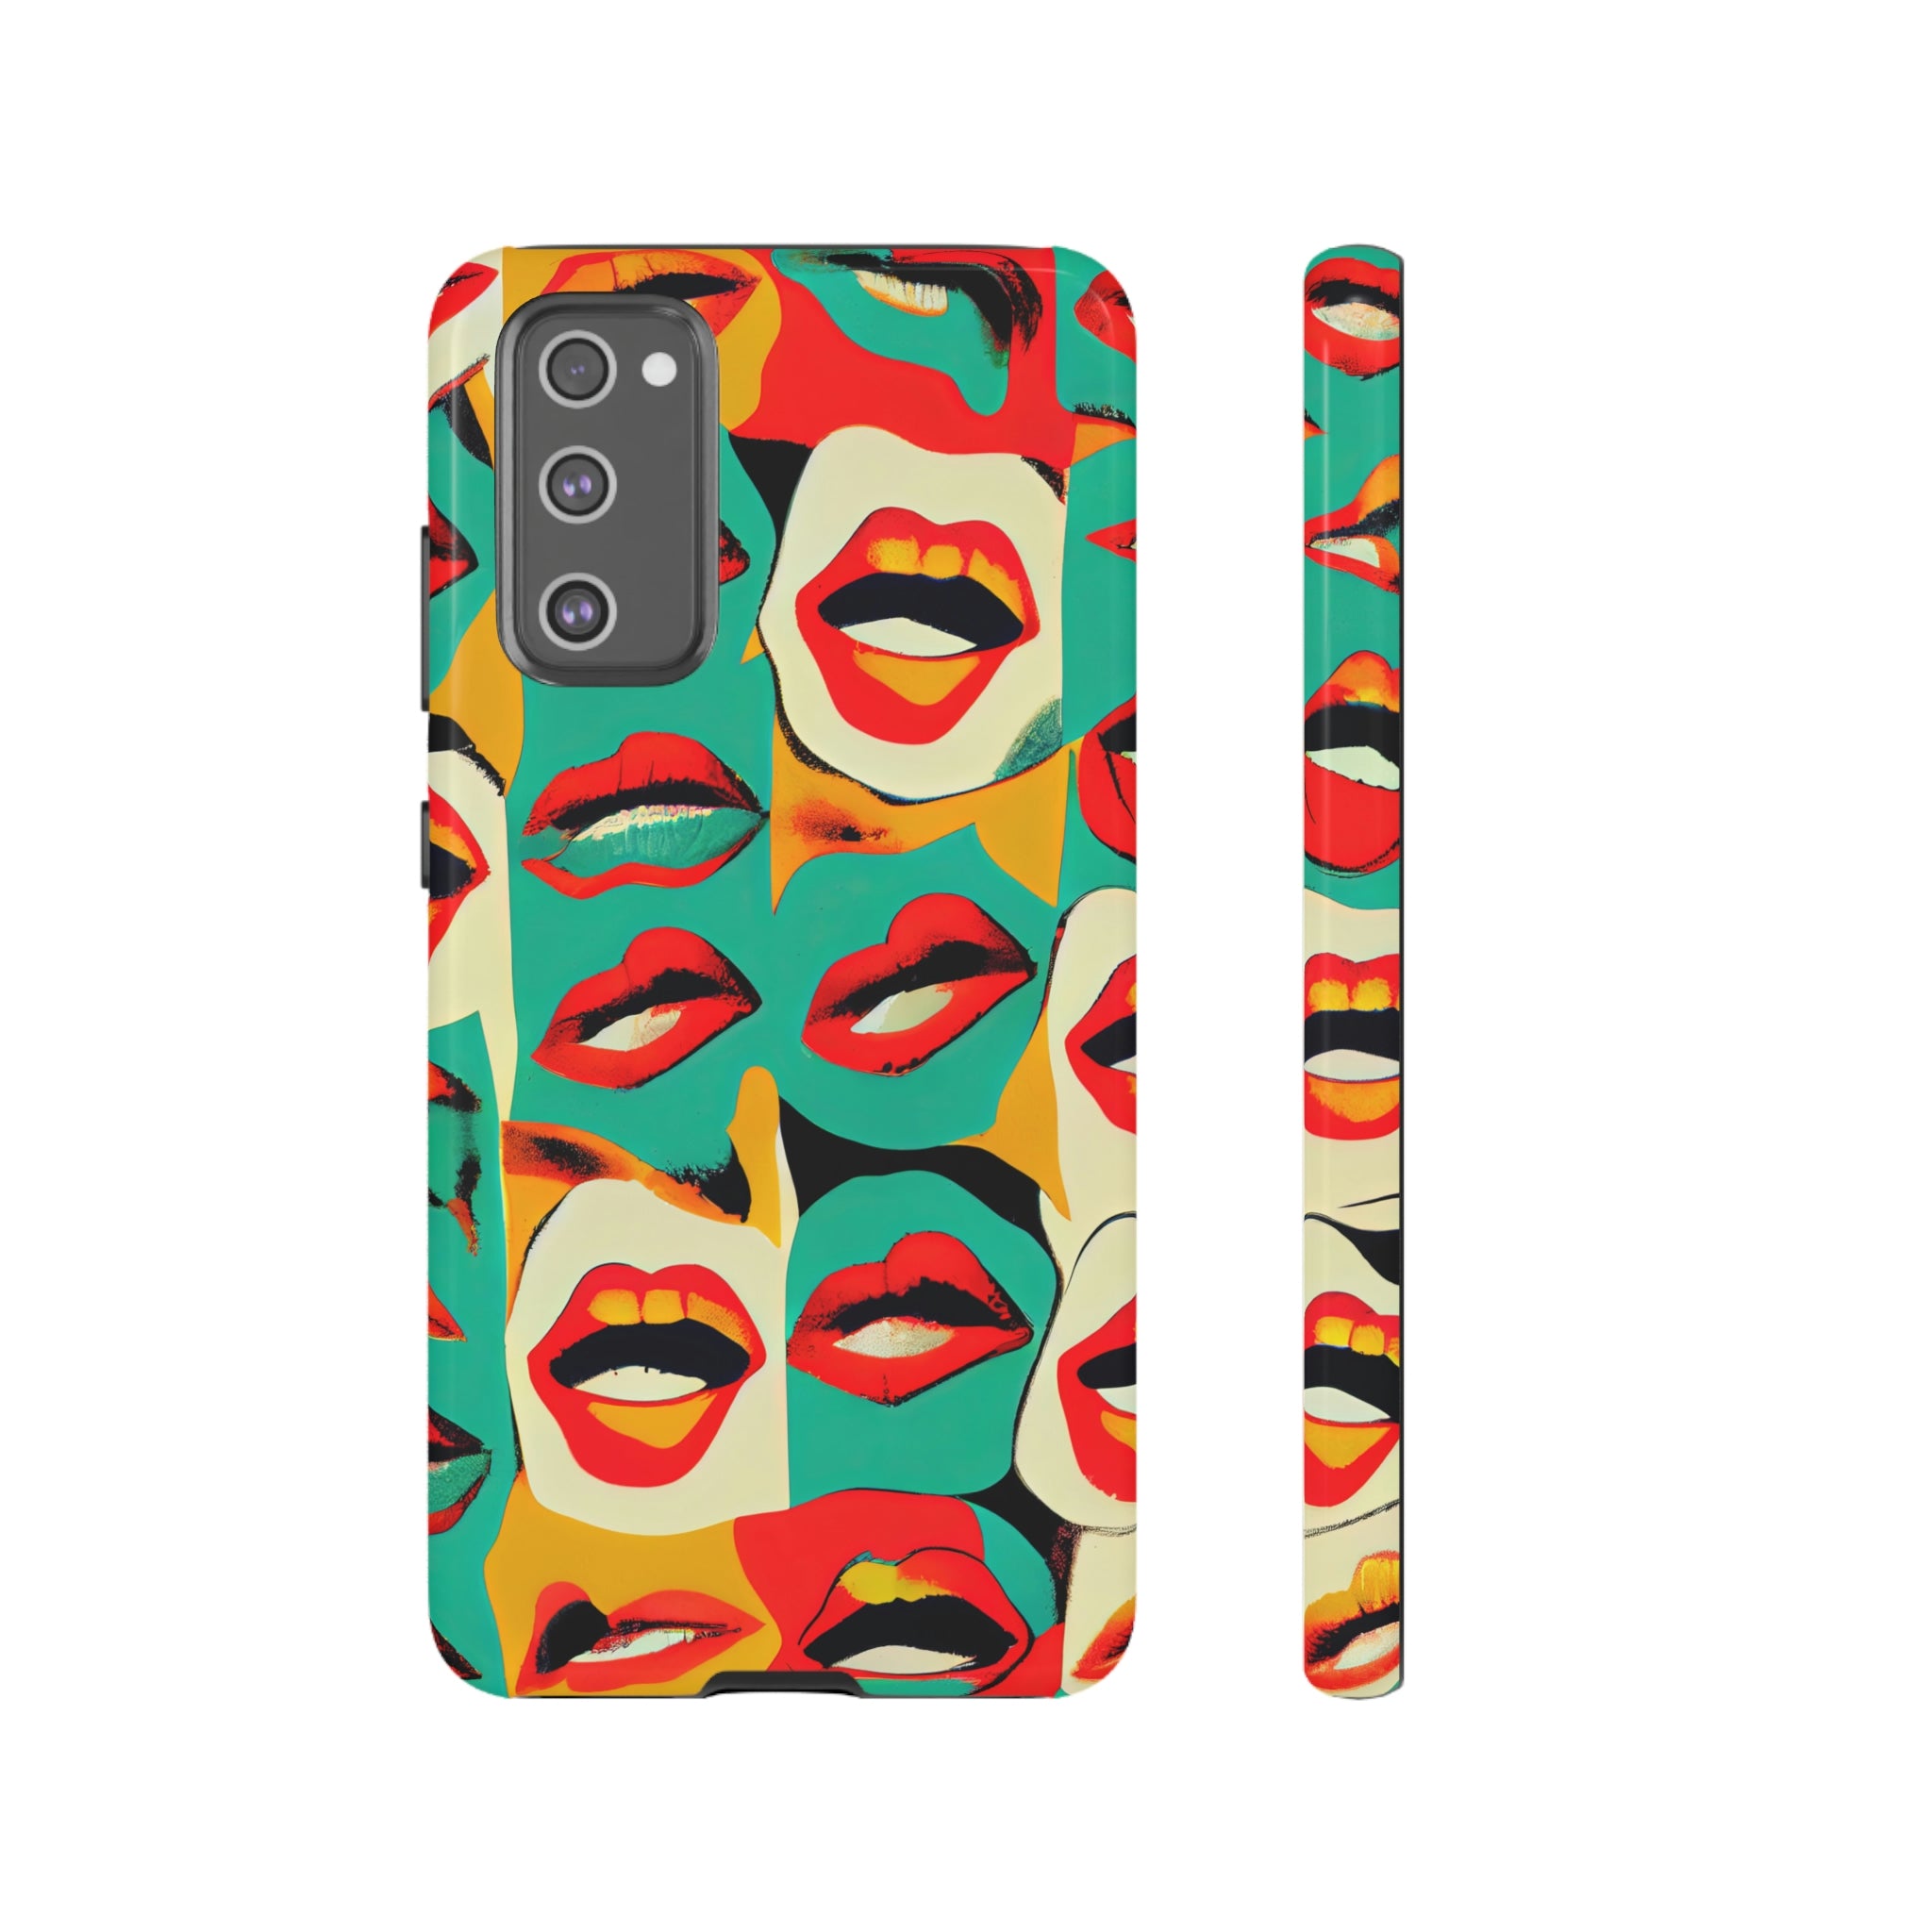 Mouthy Pop Art Phone Case